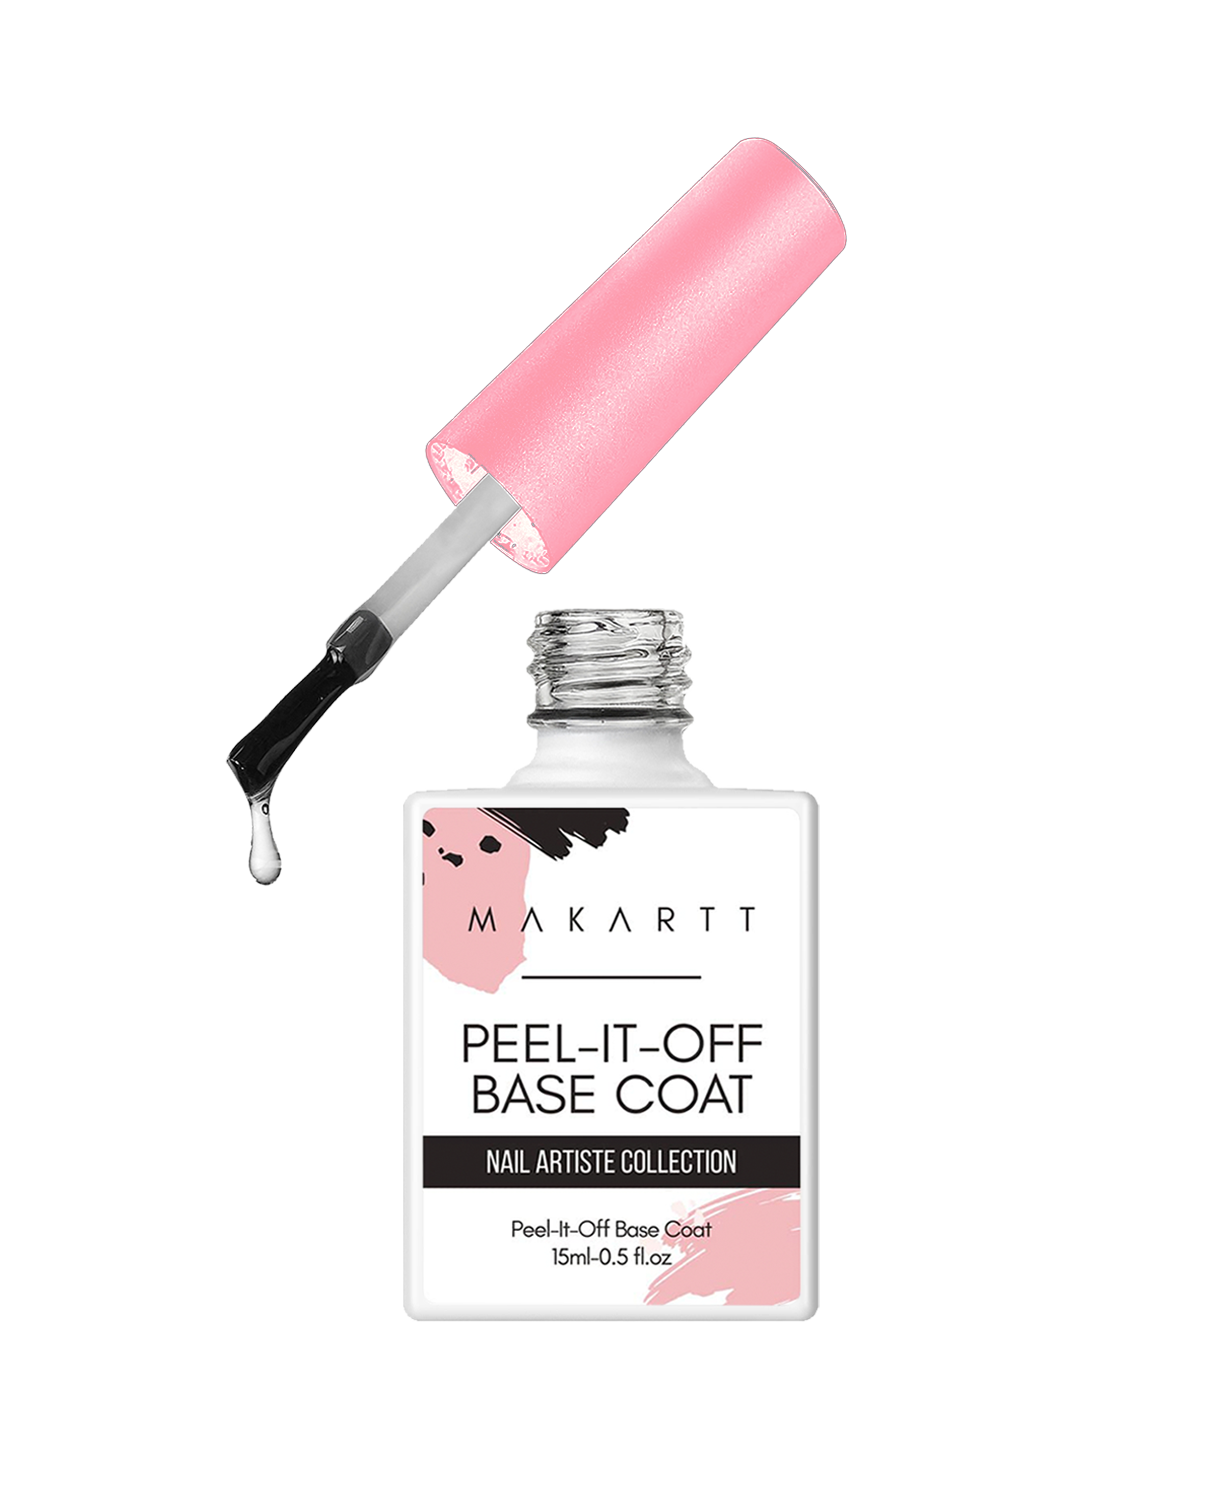 Makartt Peelable/Peel-It-Off Base Coat (15ml)